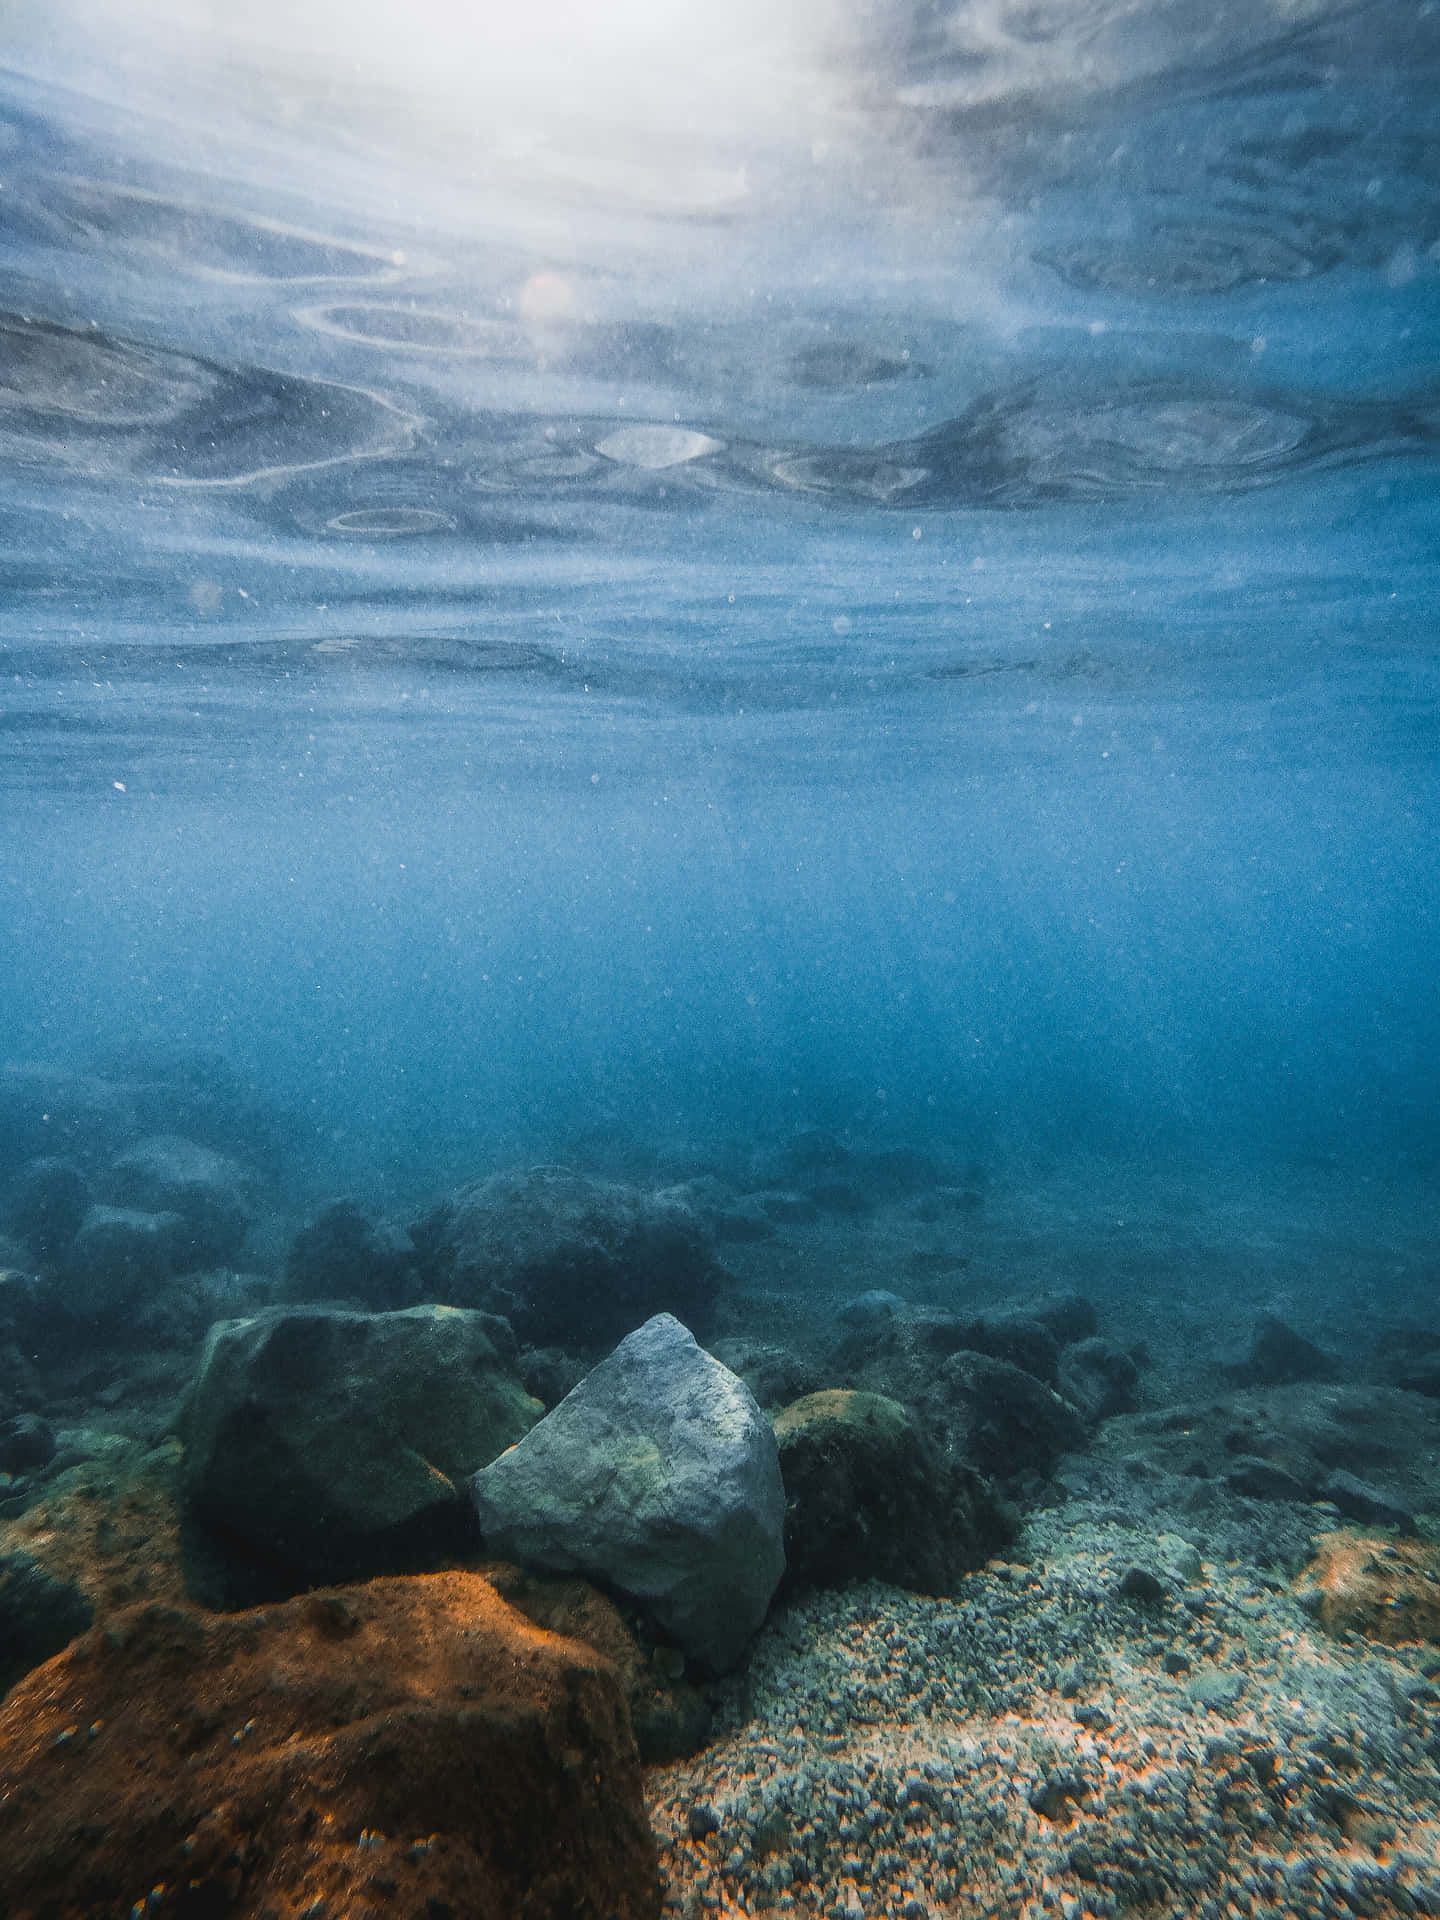 Underwater Ocean Scene With Rocks And Sun